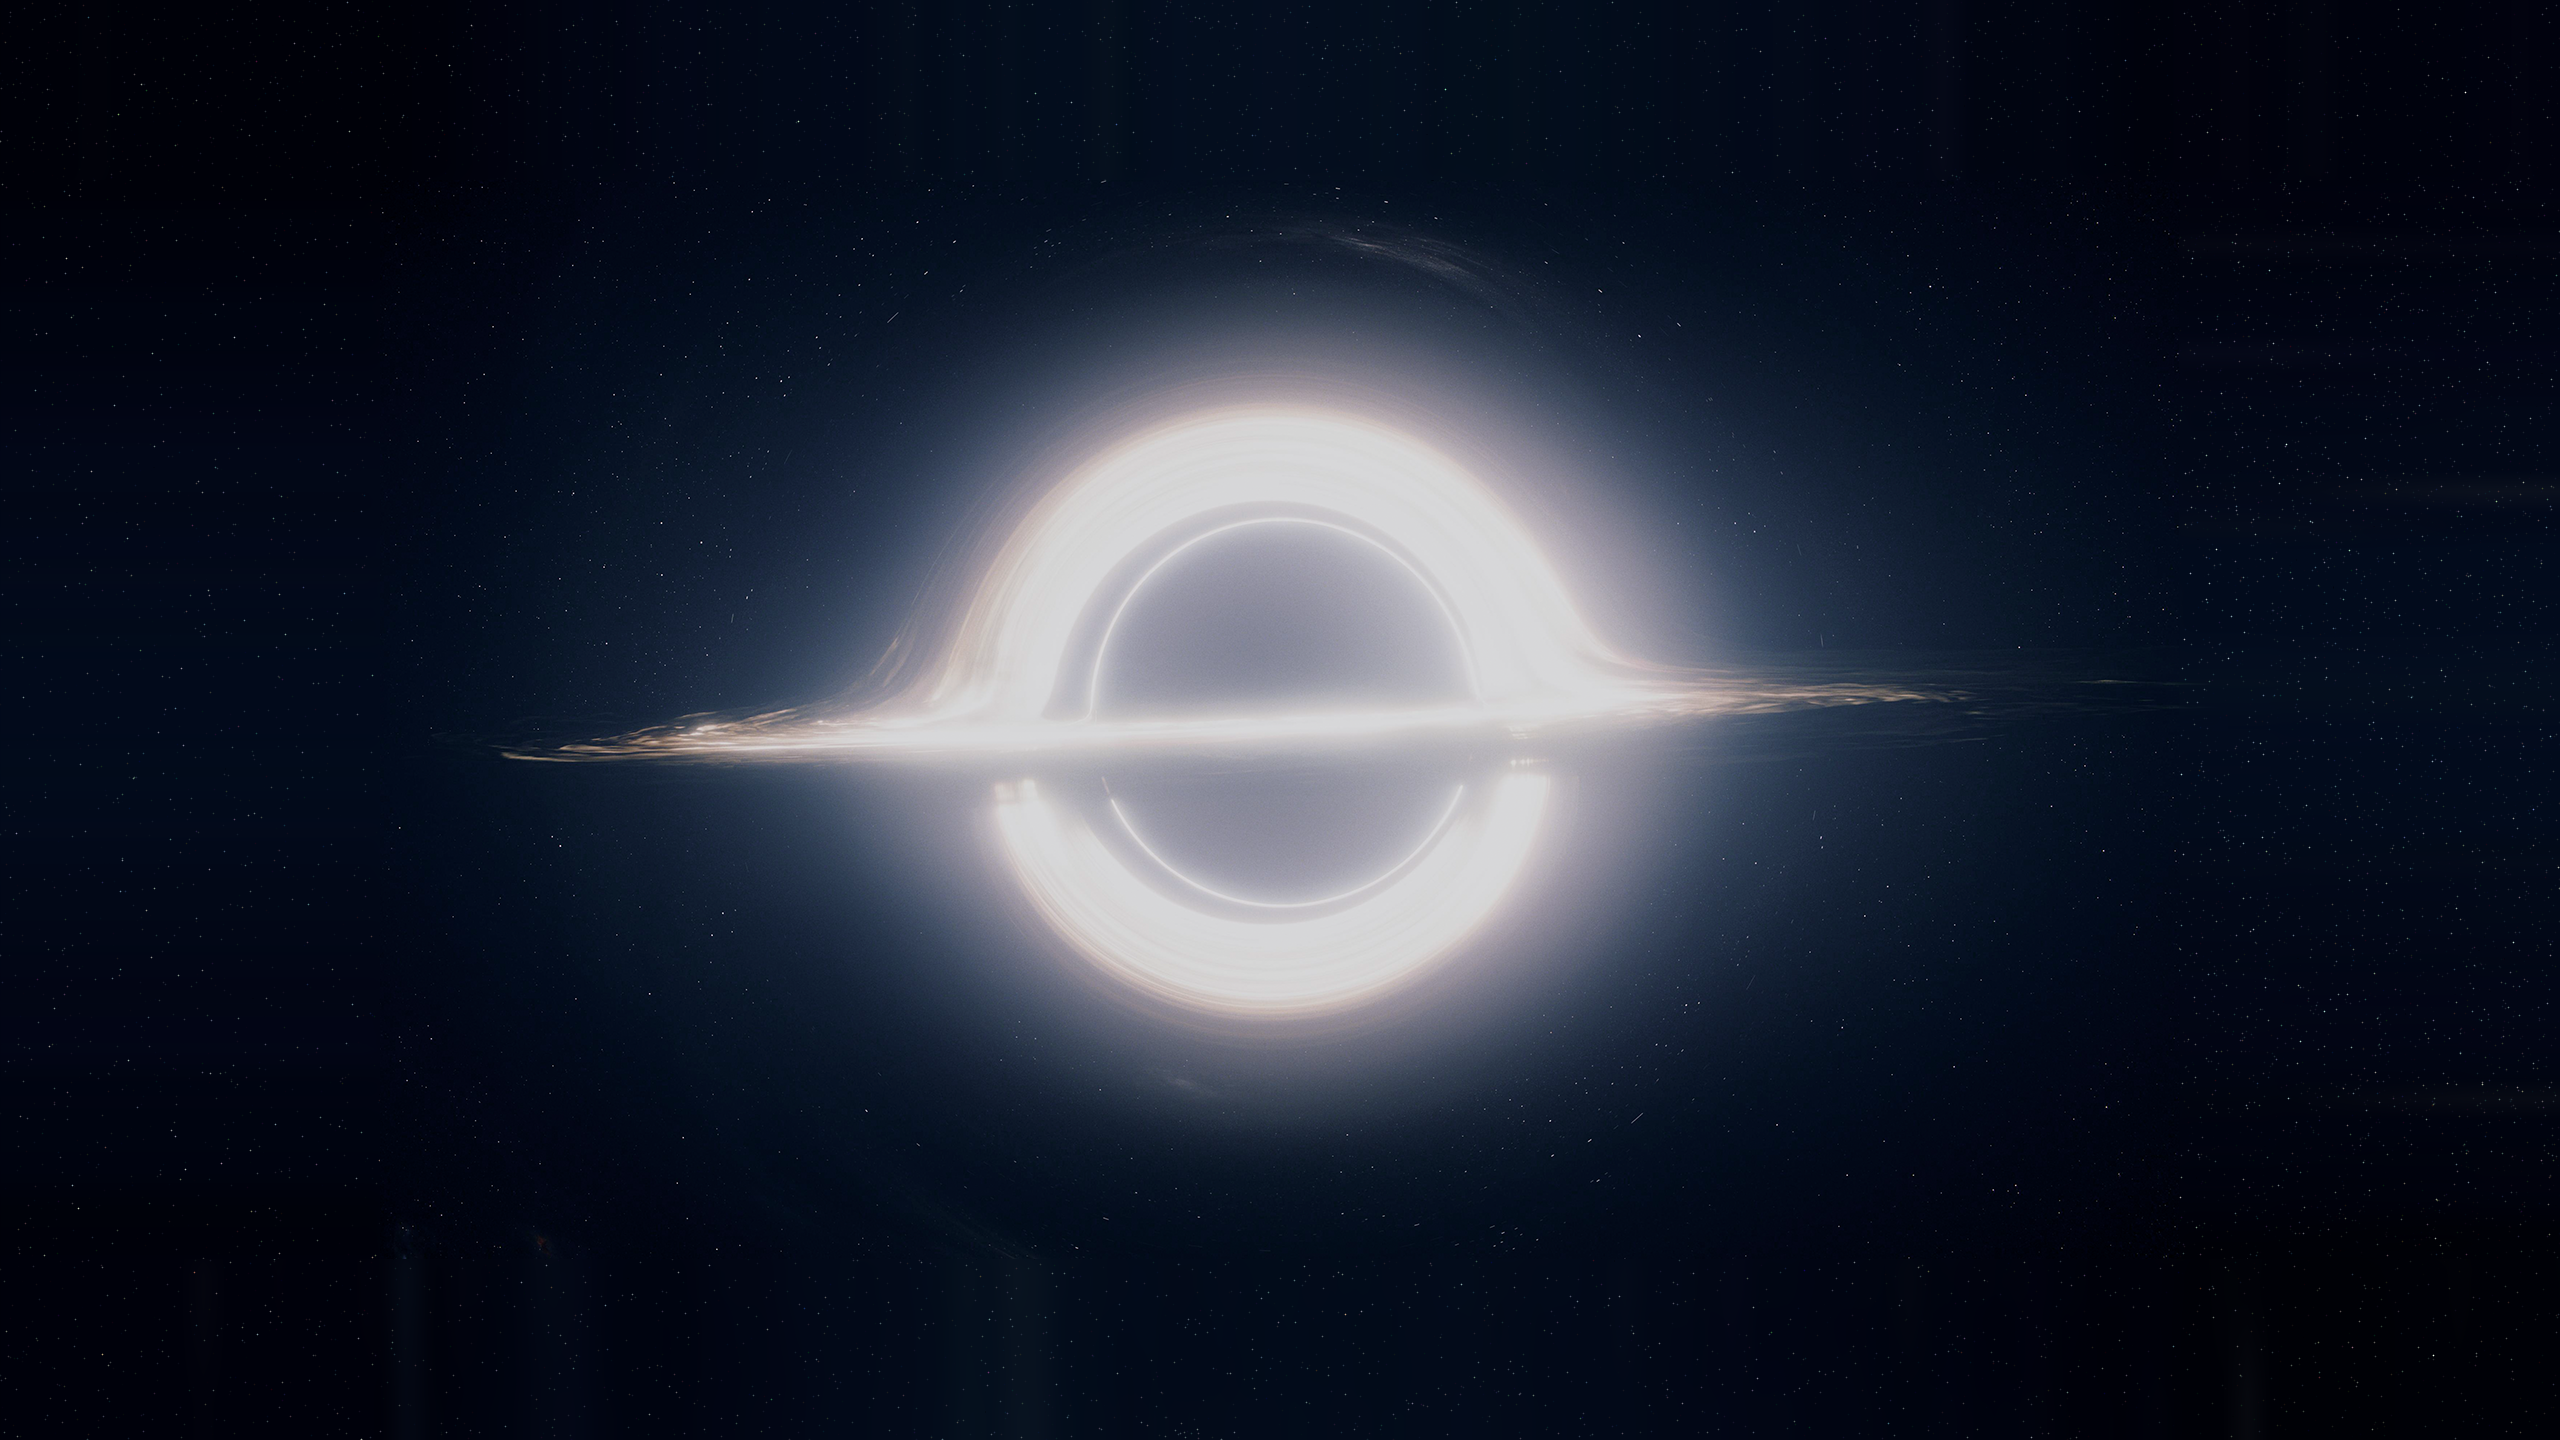 Space Interstellar Movie Black Holes Supermassive Black Hole Astronomy 2560x1440